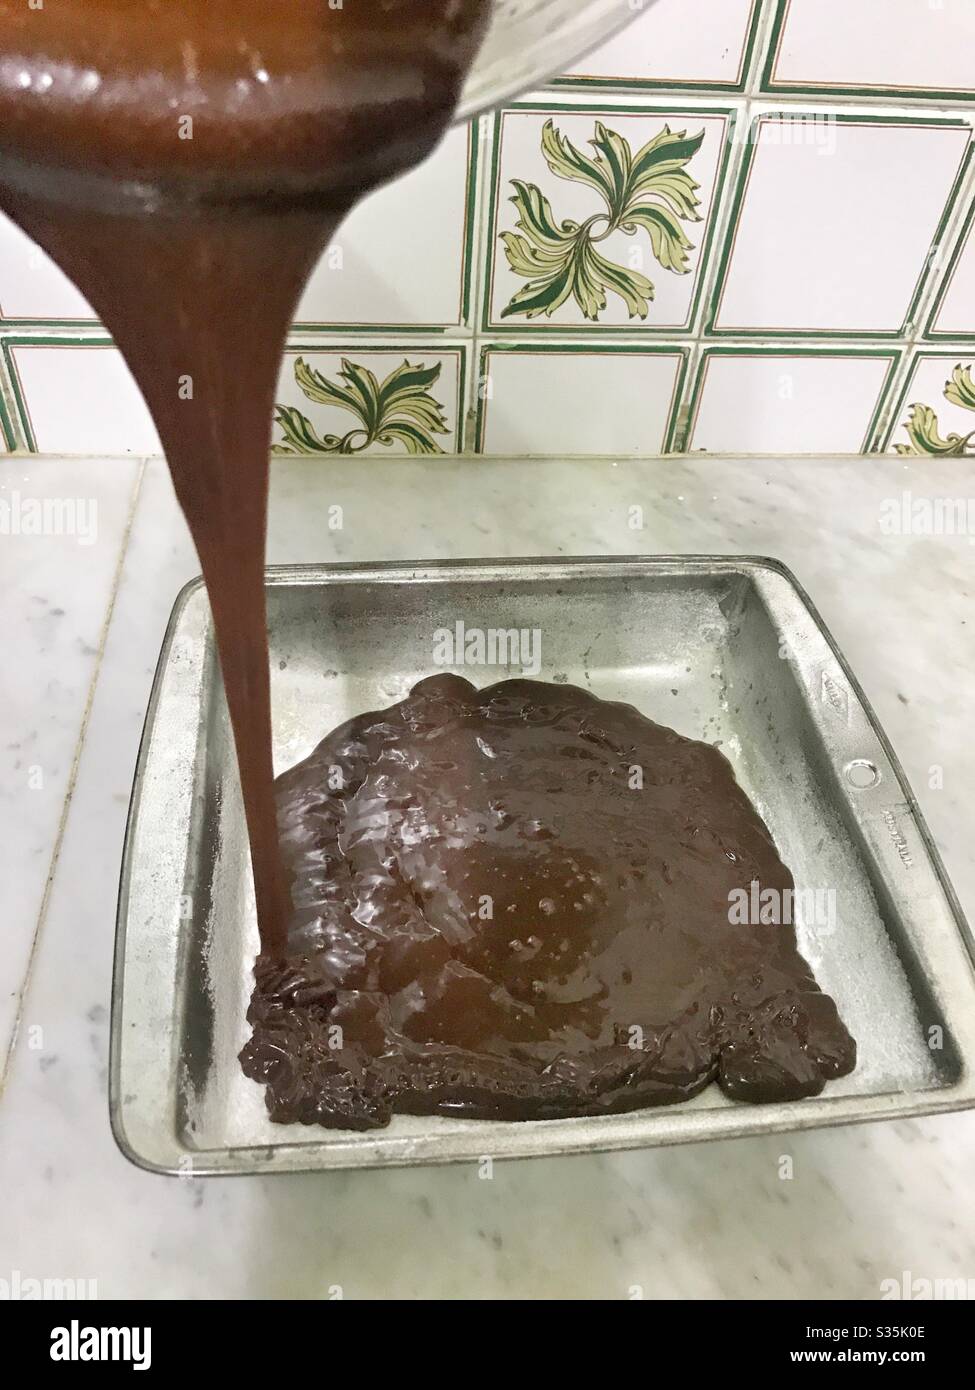 Idee di cucina casalinga: Brownies nella fabbricazione Foto Stock